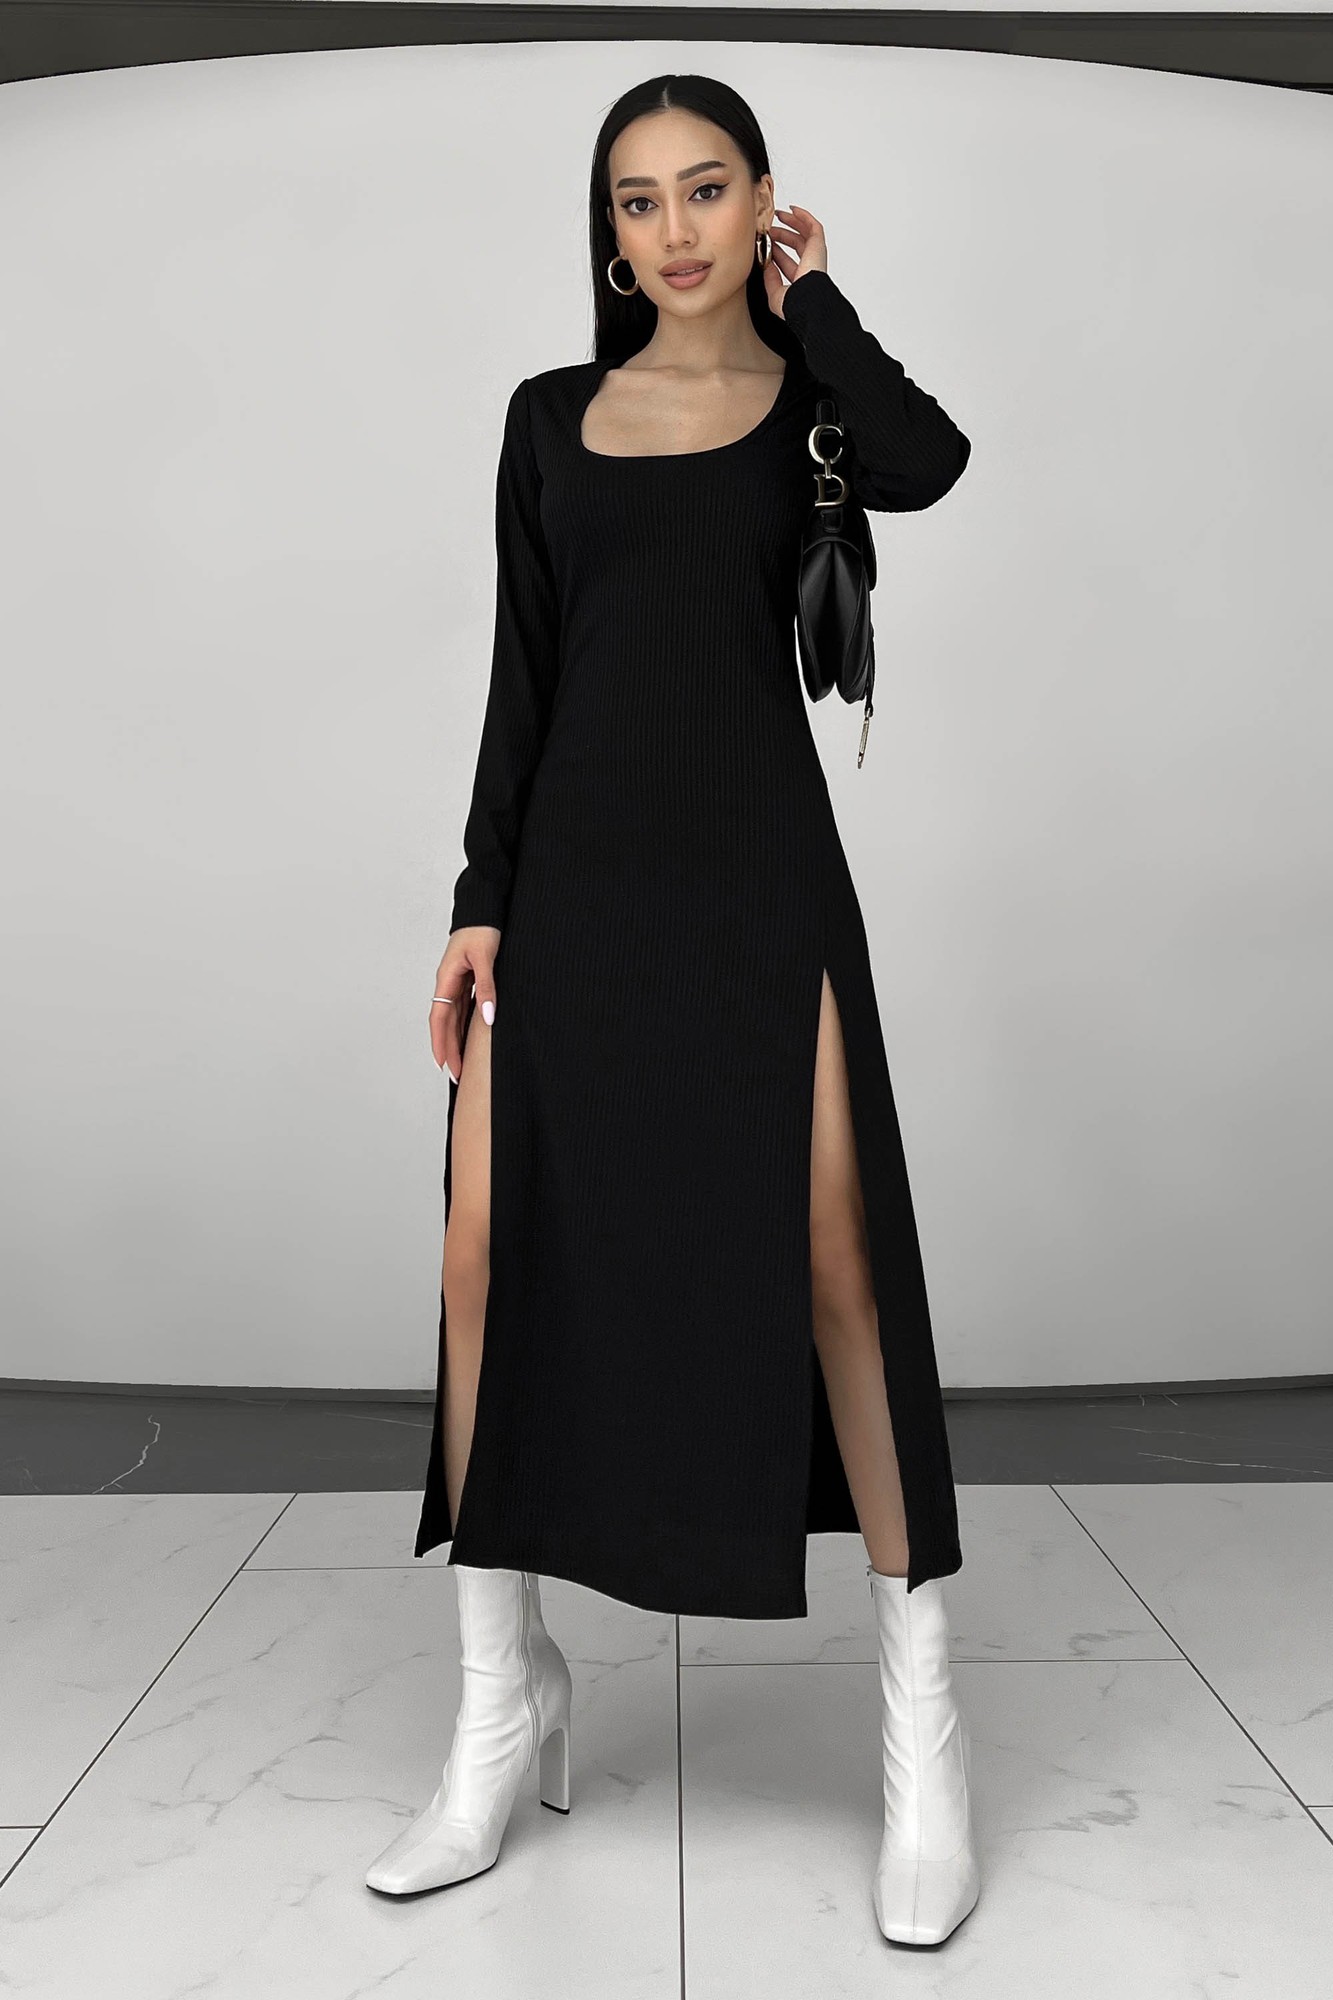 Mystic dress in black color